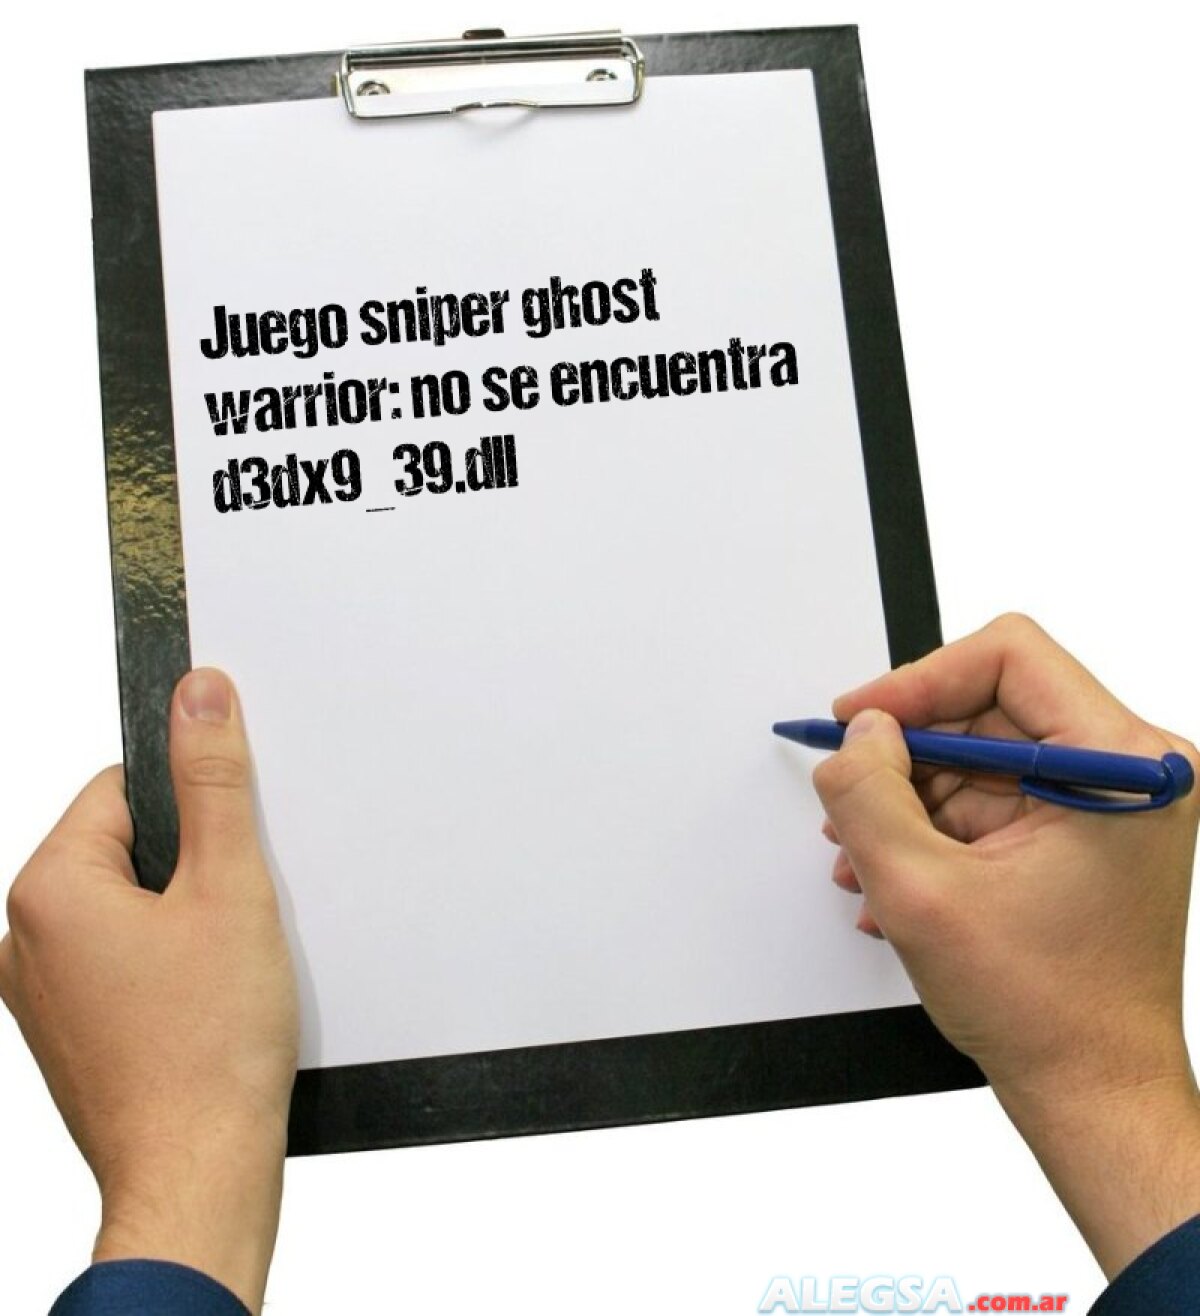 Juego sniper ghost warrior: no se encuentra d3dx9_39.dll